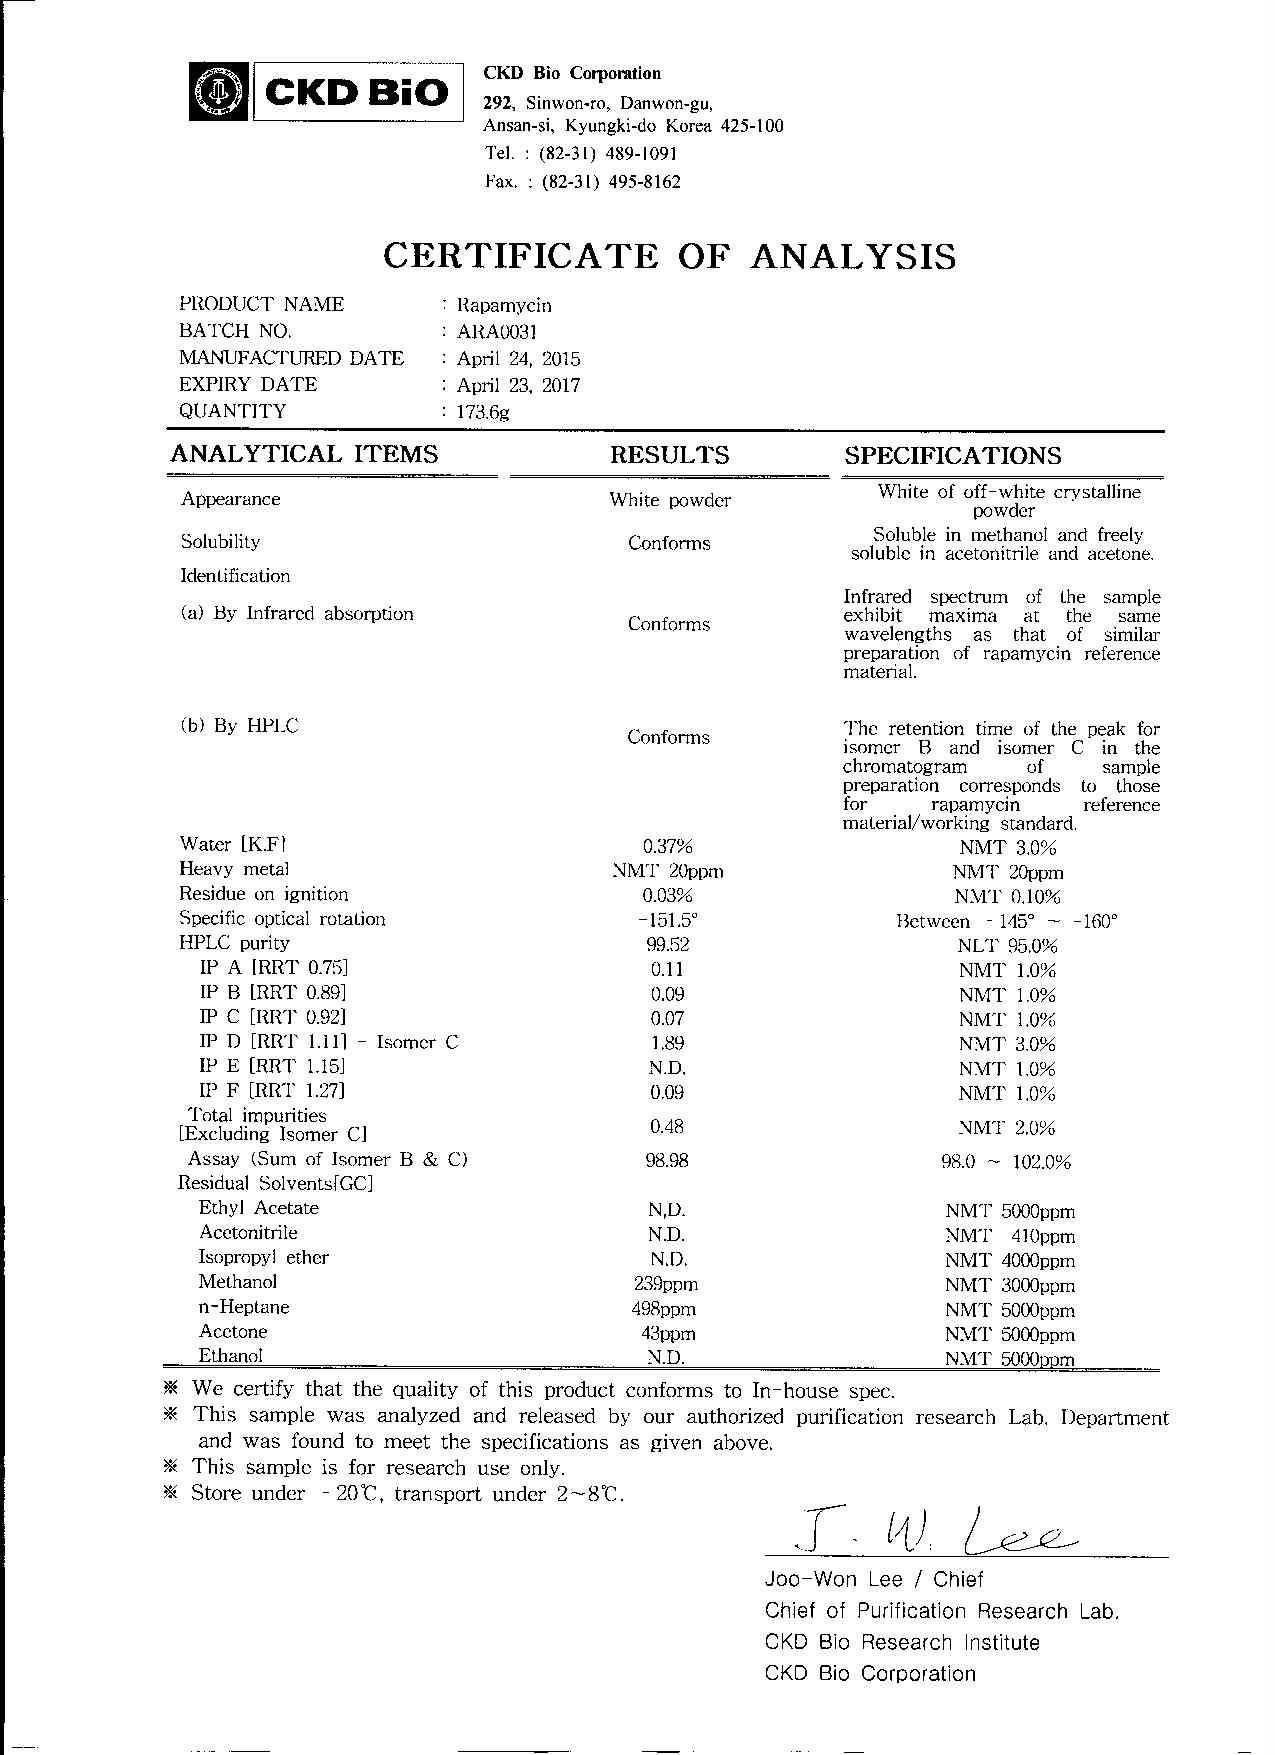 Certificate of rapamycin analysis